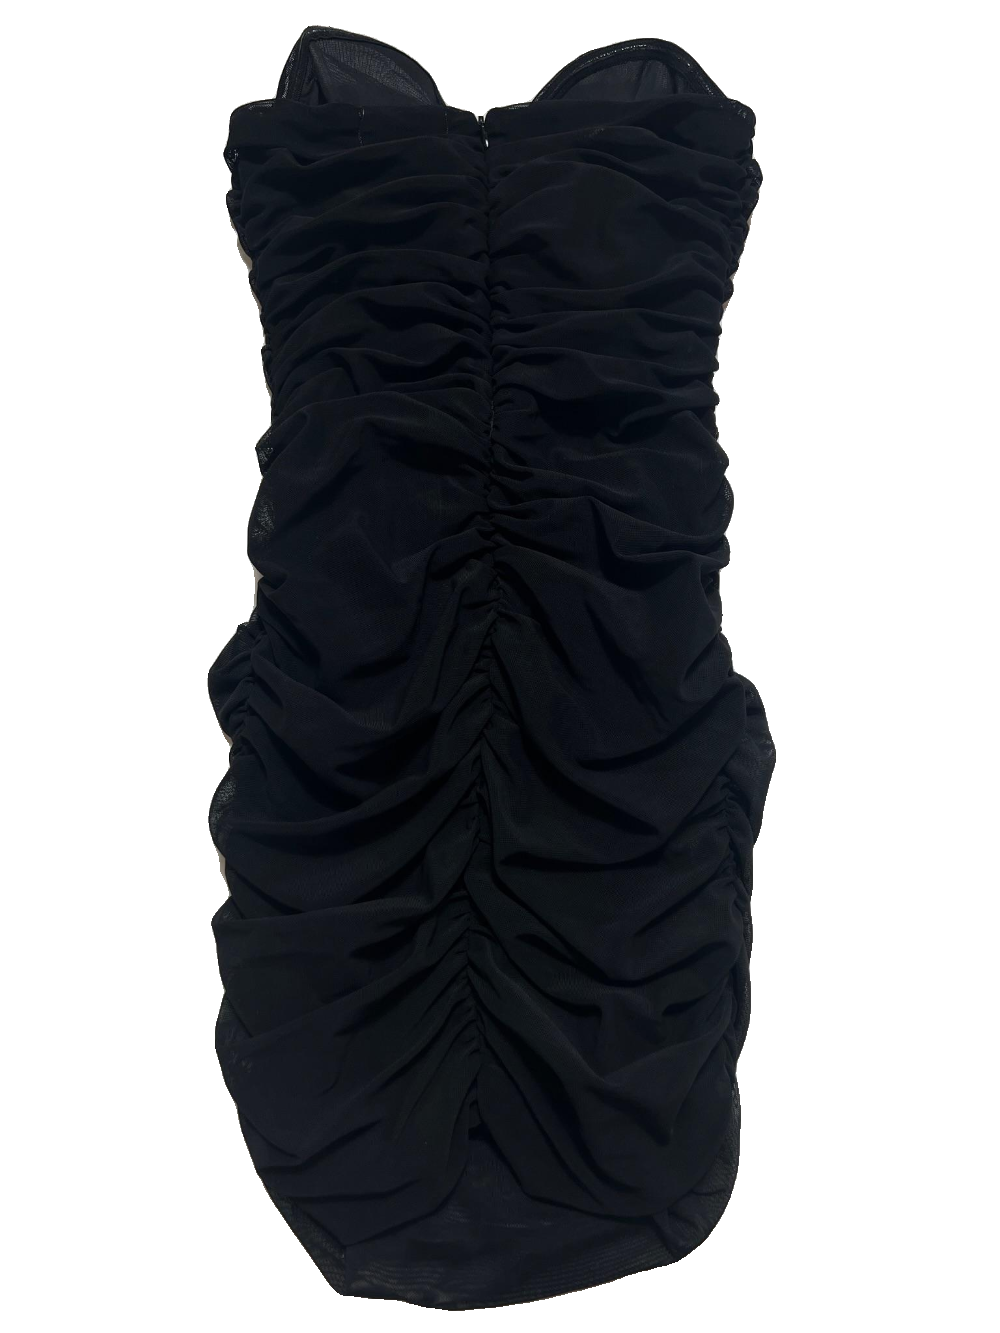 YG Collection - Black Dress